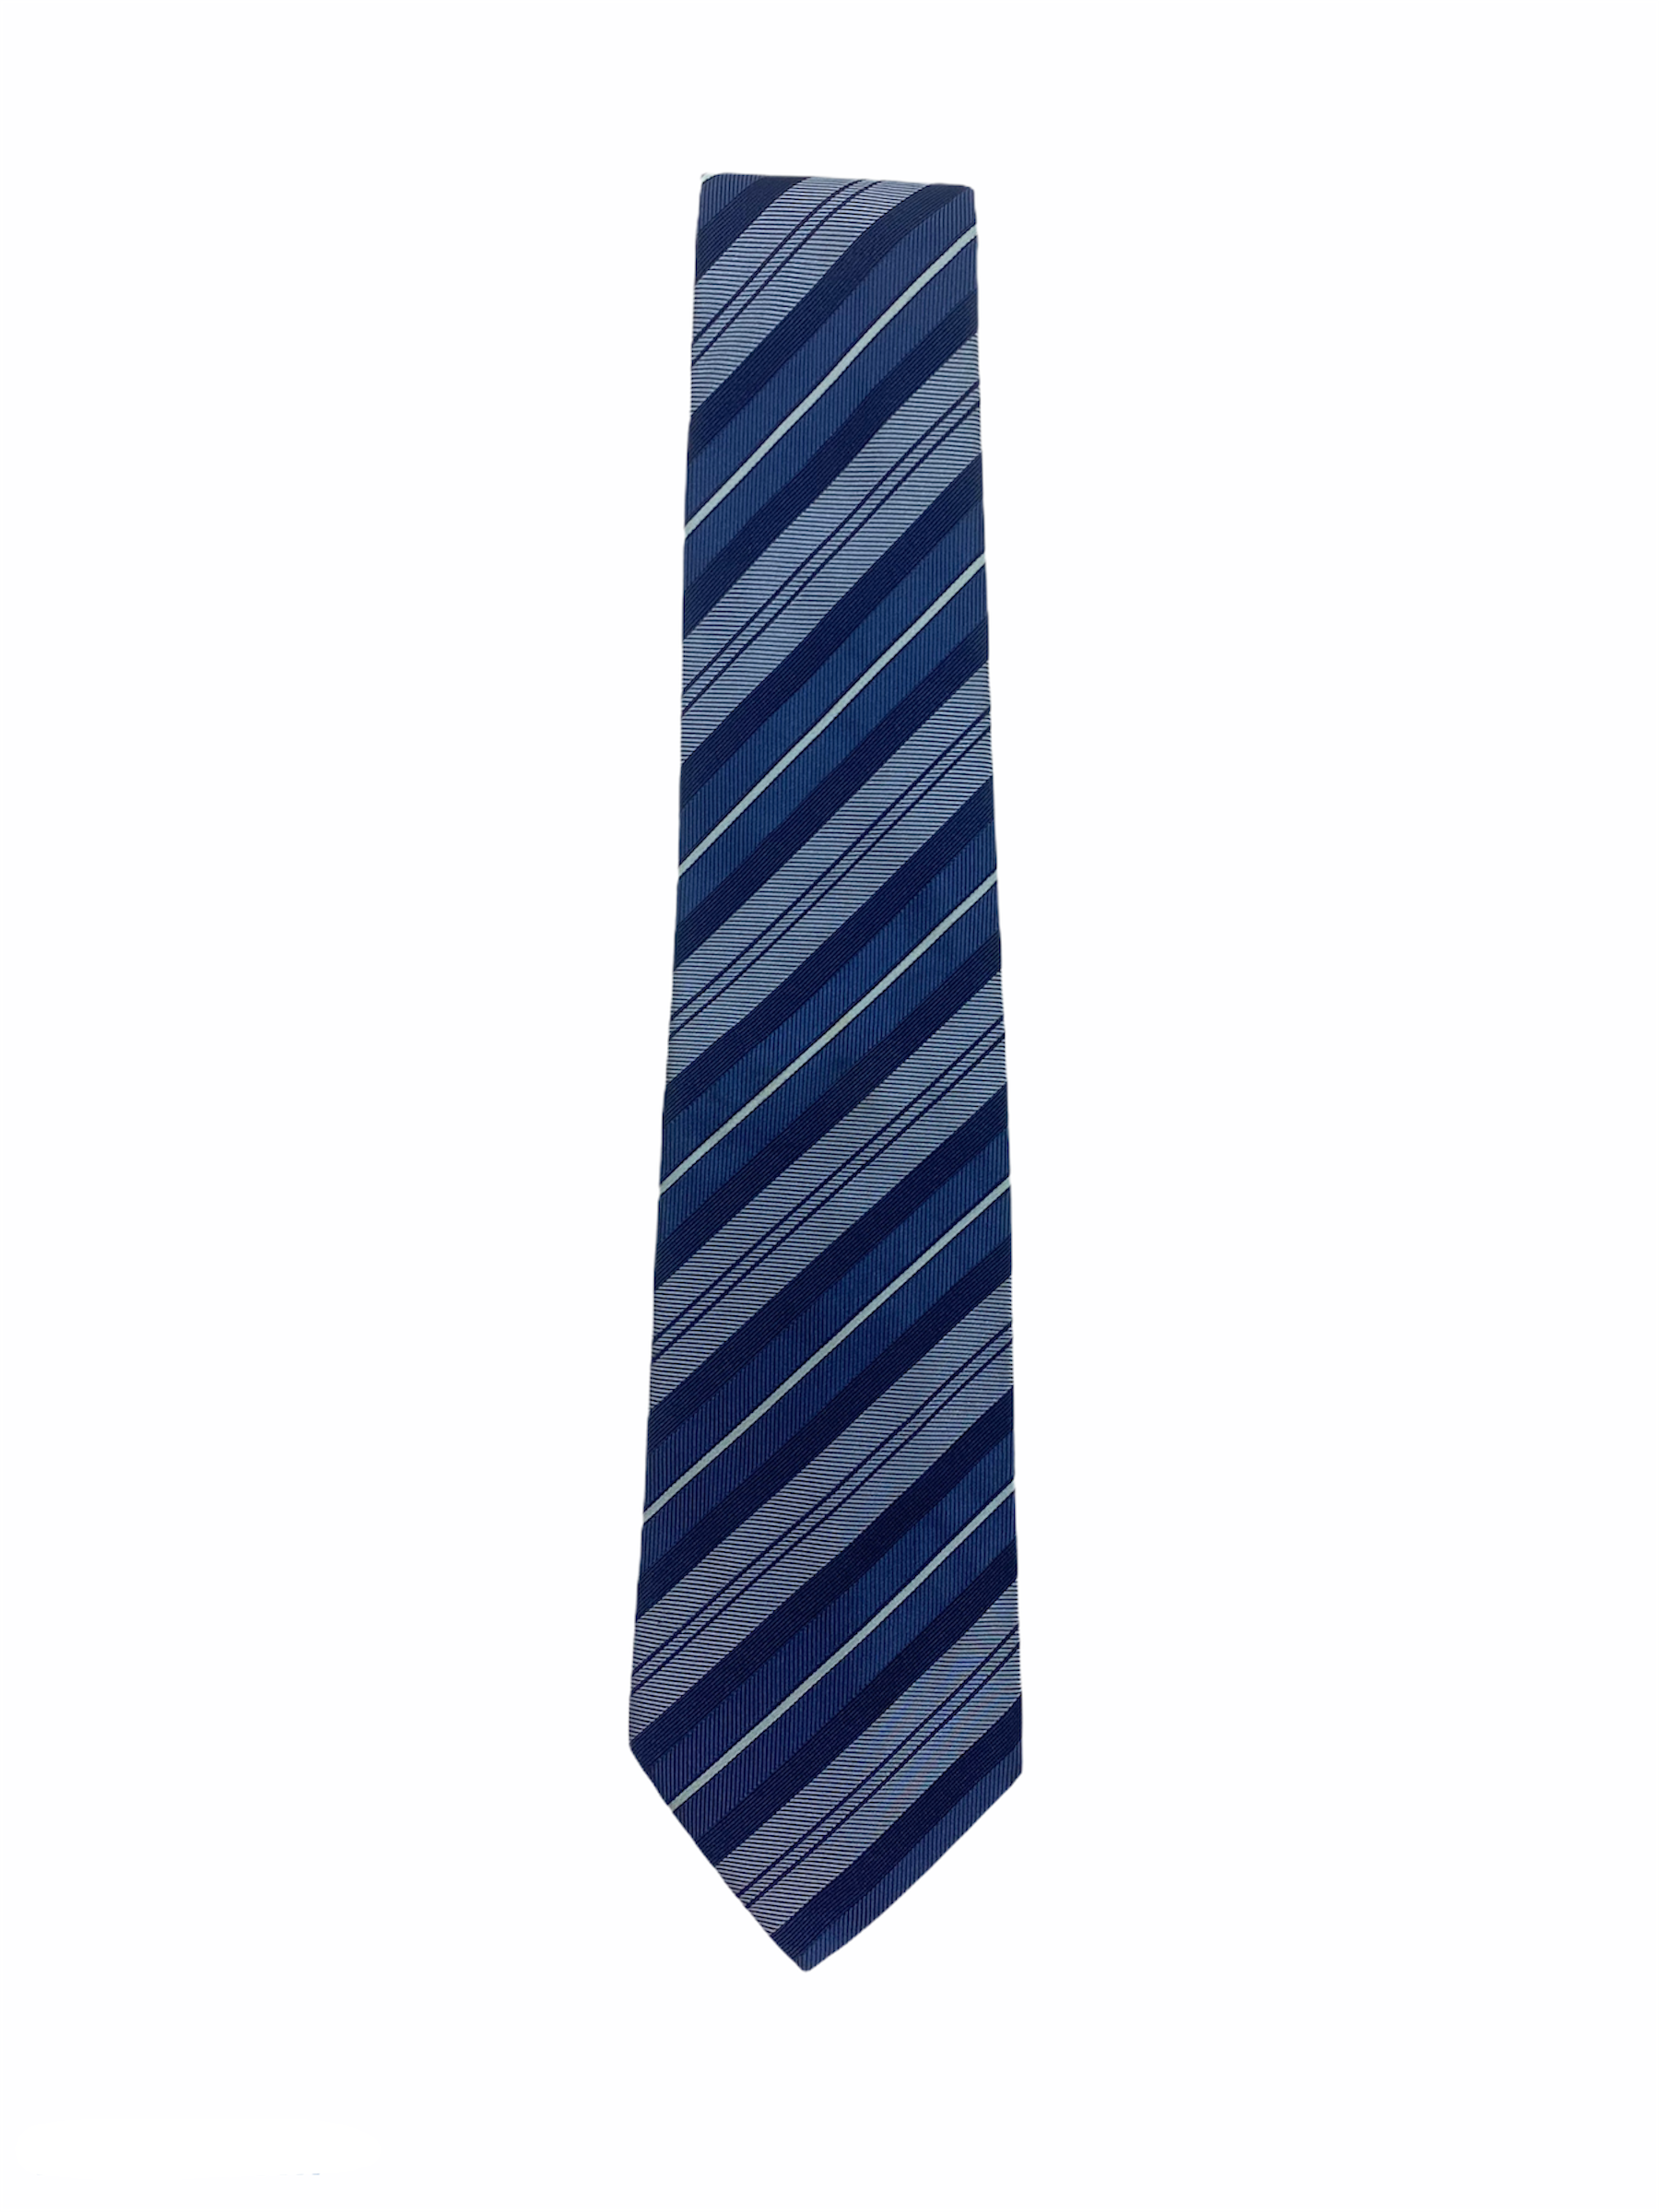 Cravate Giorgio Armani à rayures diagonales, camaïeu de bleu (bleu marine, bleu clair et bleu nuit), en soie 100 %, made in italy.